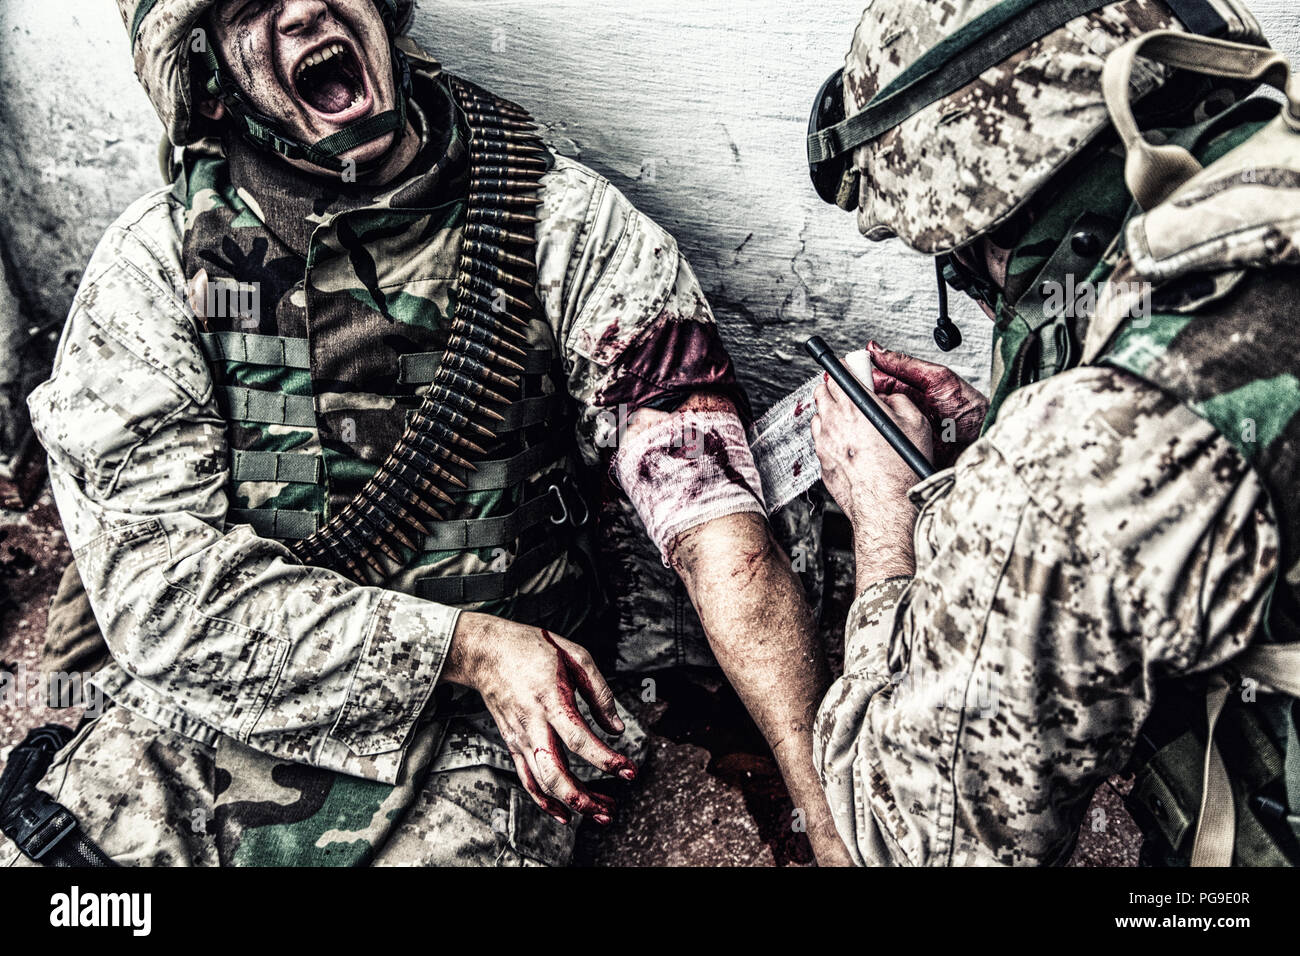 Medic militar obligatorio herida de bala durante la lucha Foto de stock